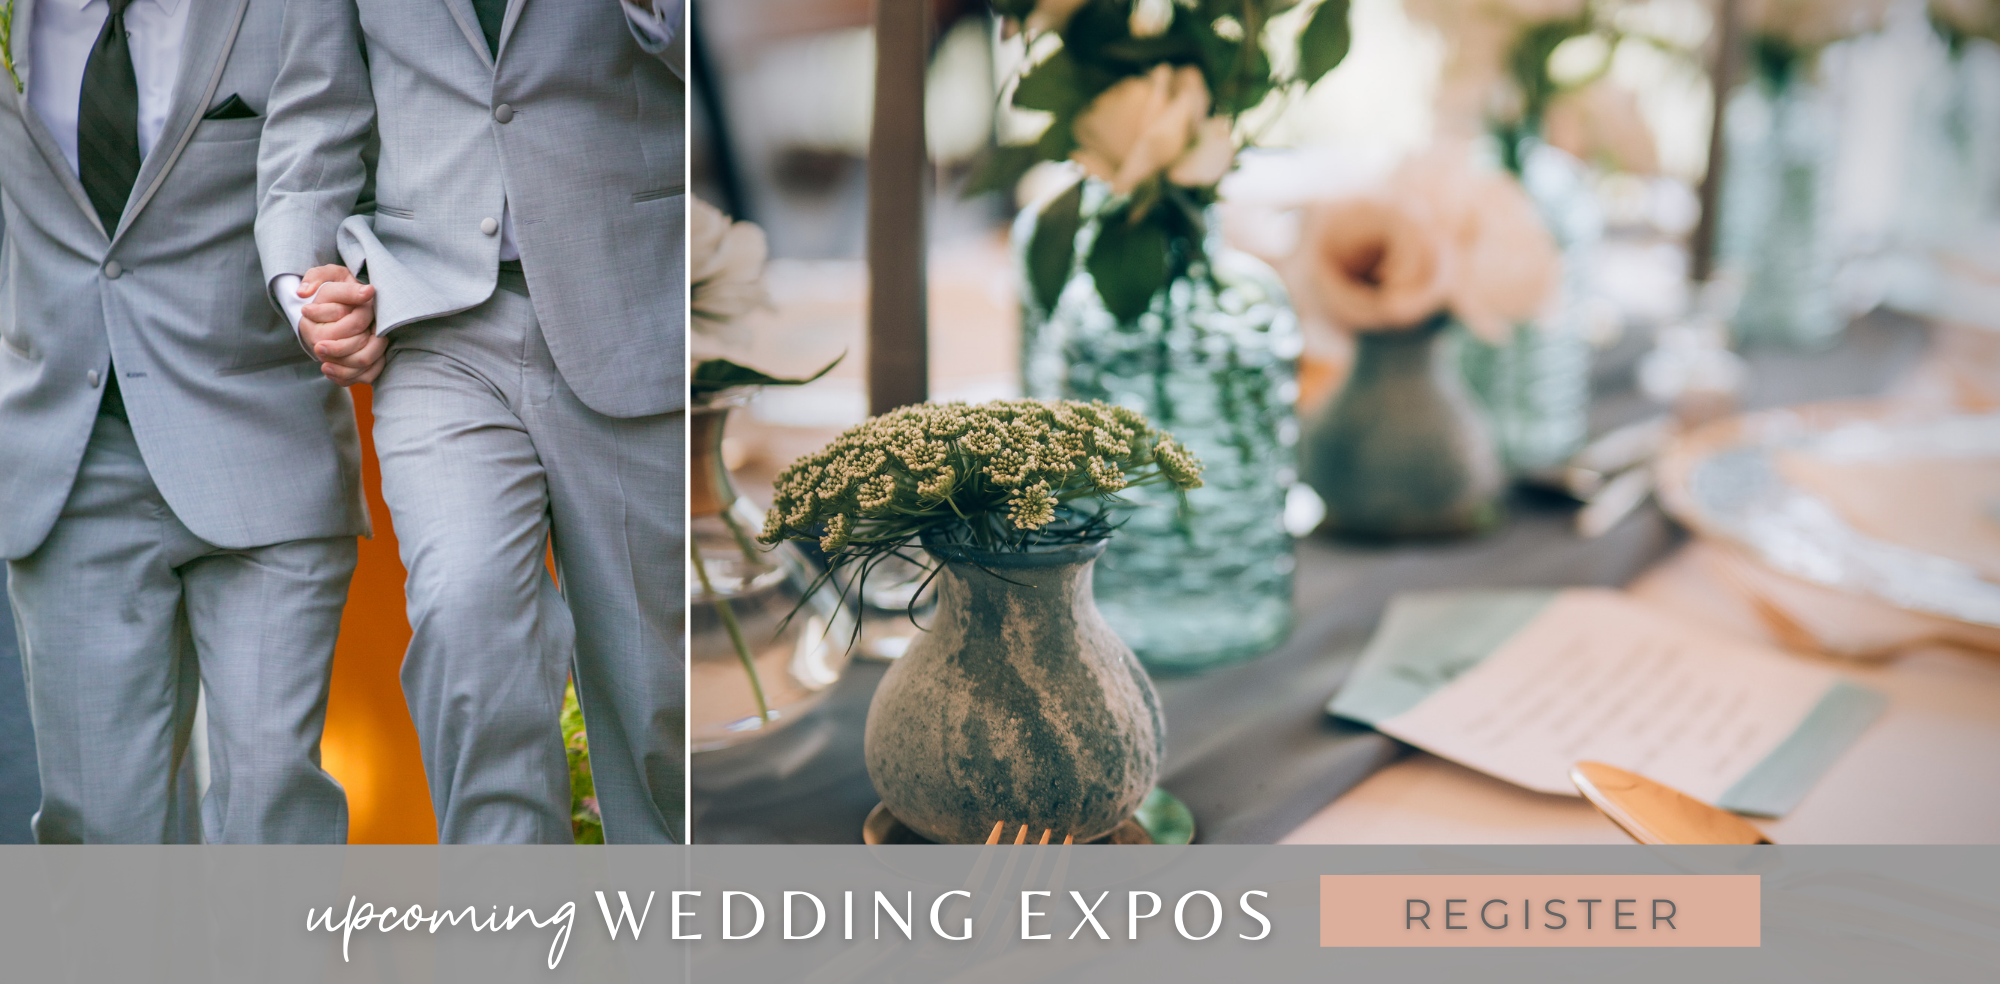 Register for wedding expos